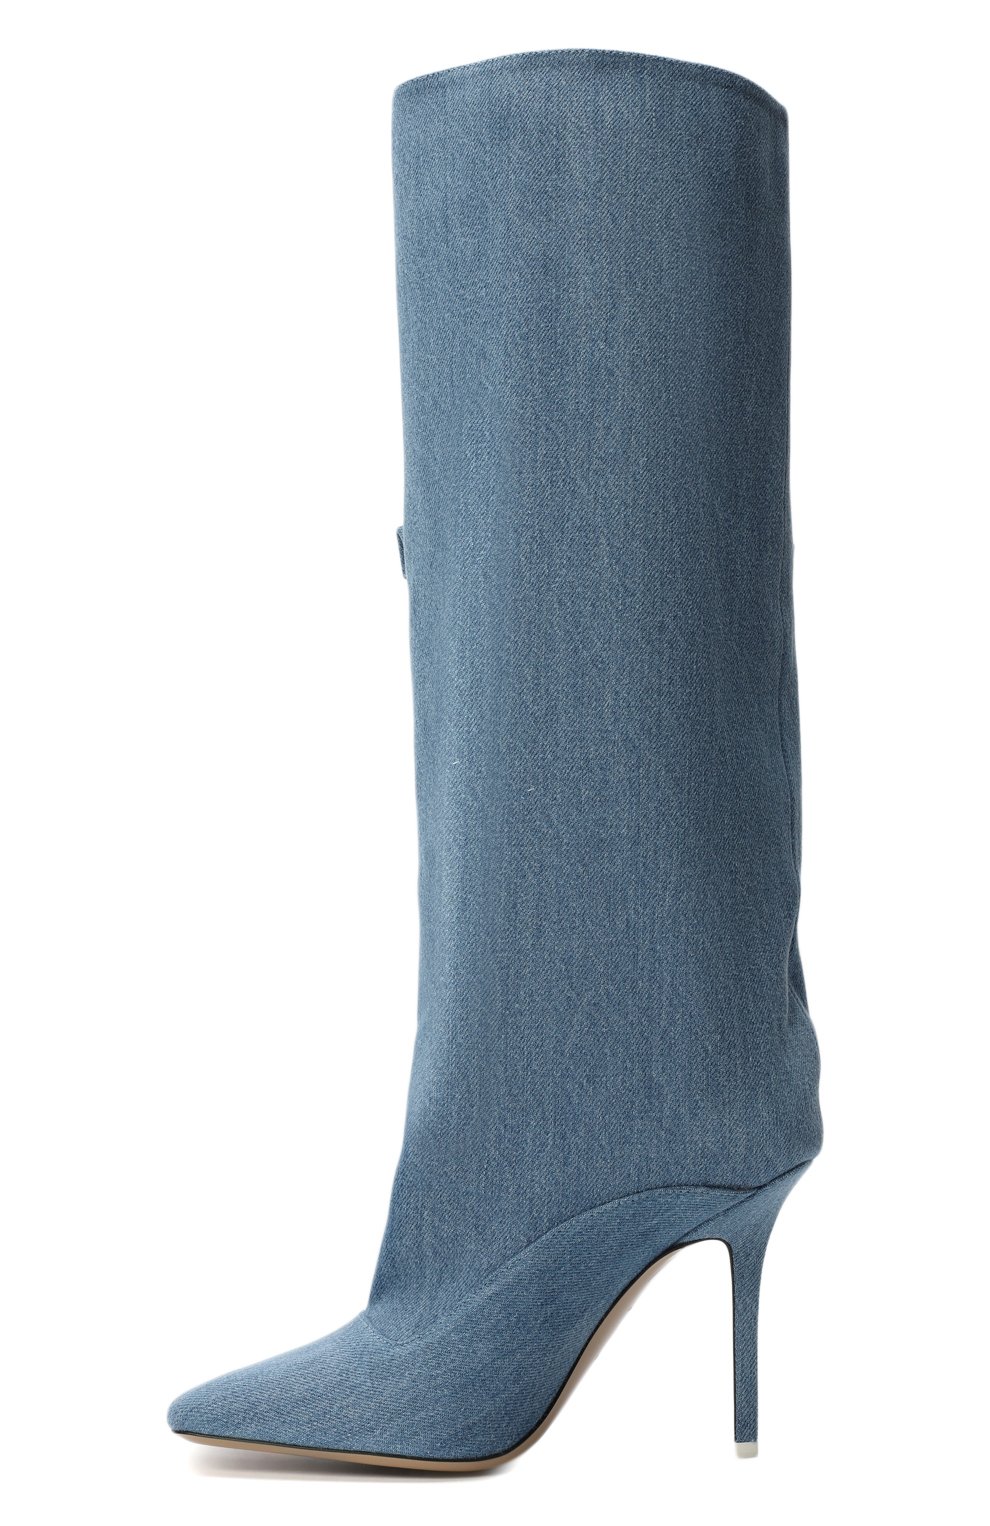 Текстильные сапоги Sienna 105mm | The Attico | Голубой - 6